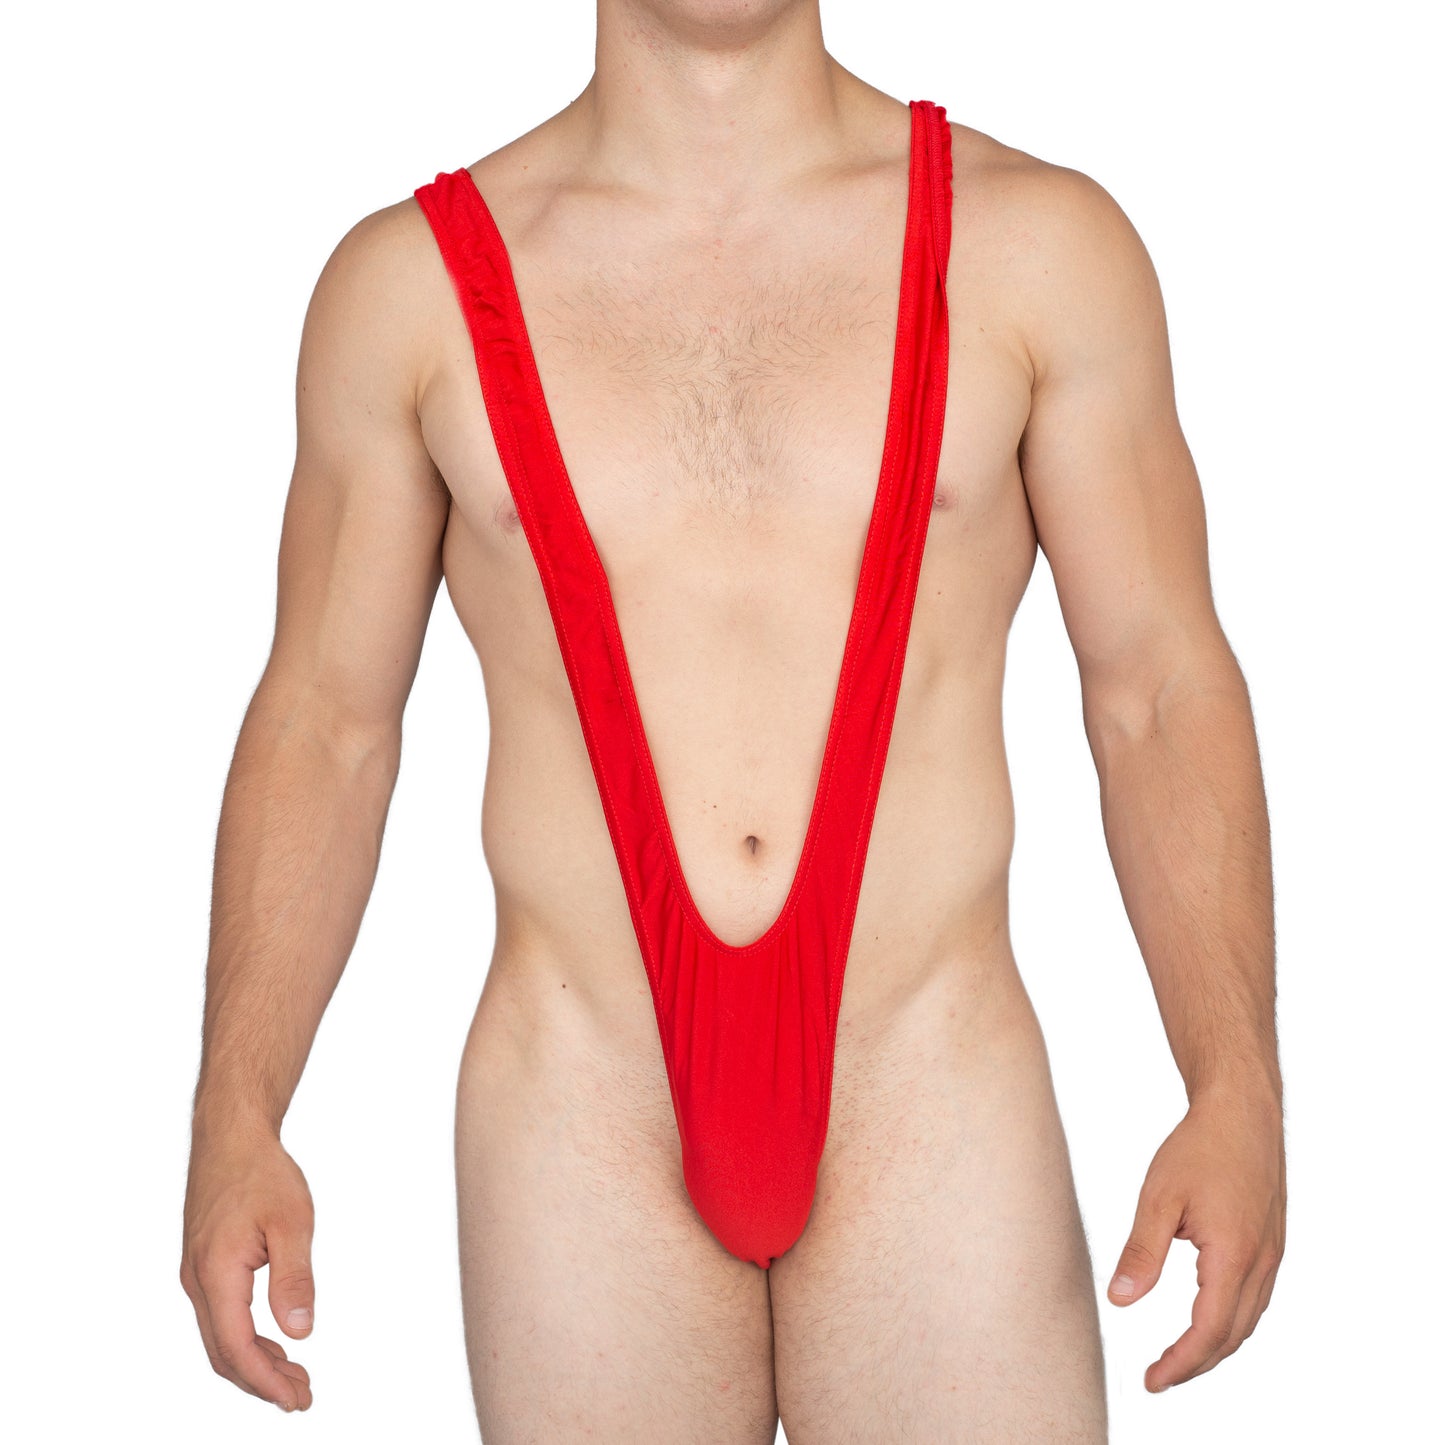 Borat Mankini Swimsuit Costume | Mankini.com mankini.com